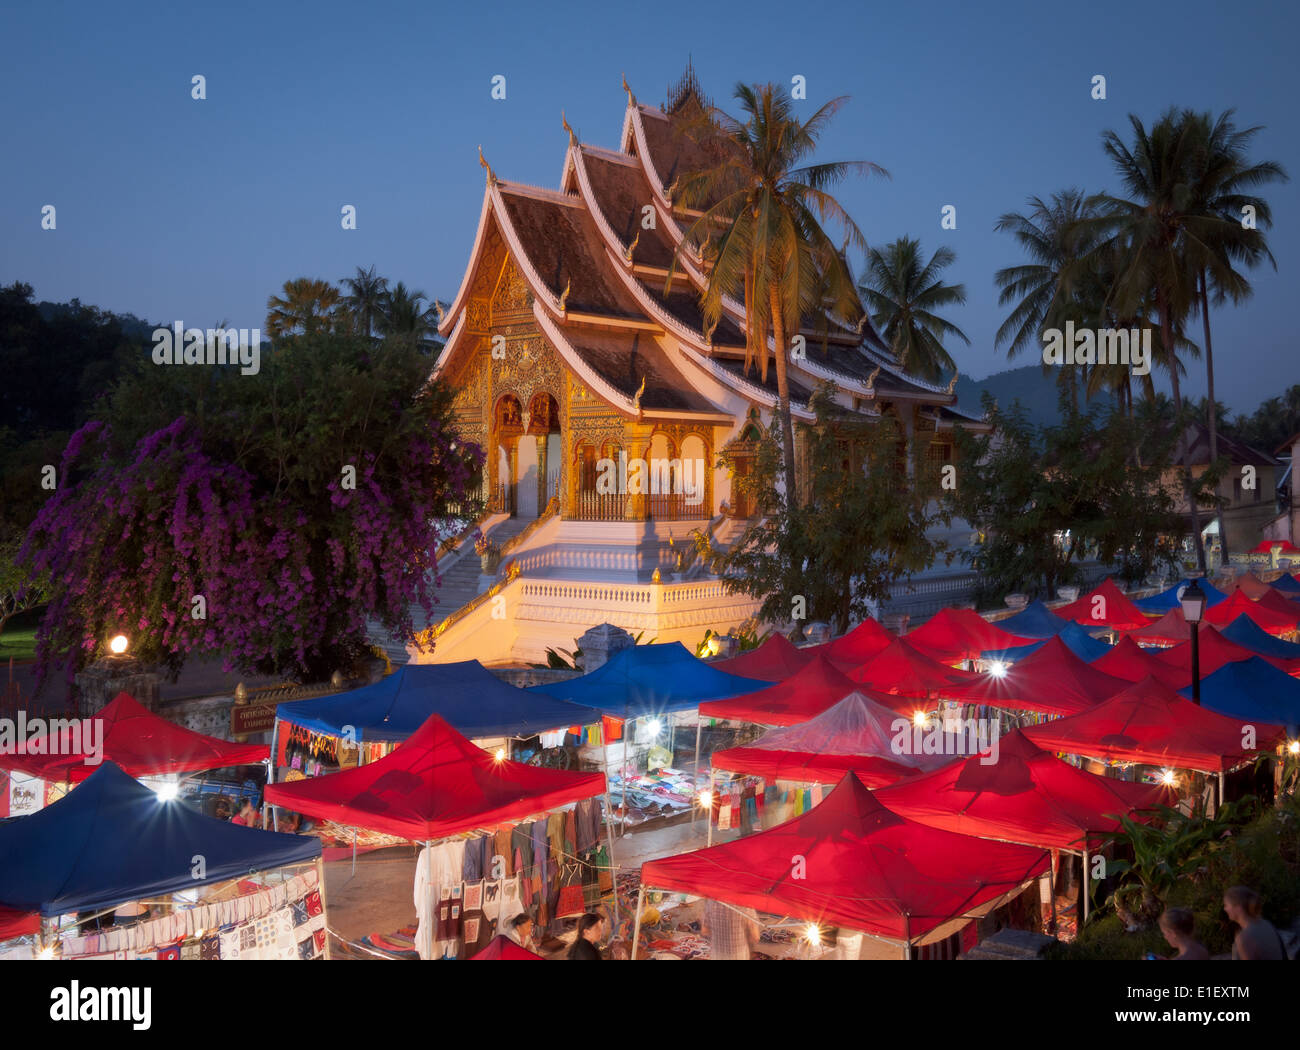 A view of the Luang Prabang Night Market. Haw Pha Bang (the Golden Hall) rises in the background.  Luang Prabang, Laos. Stock Photo